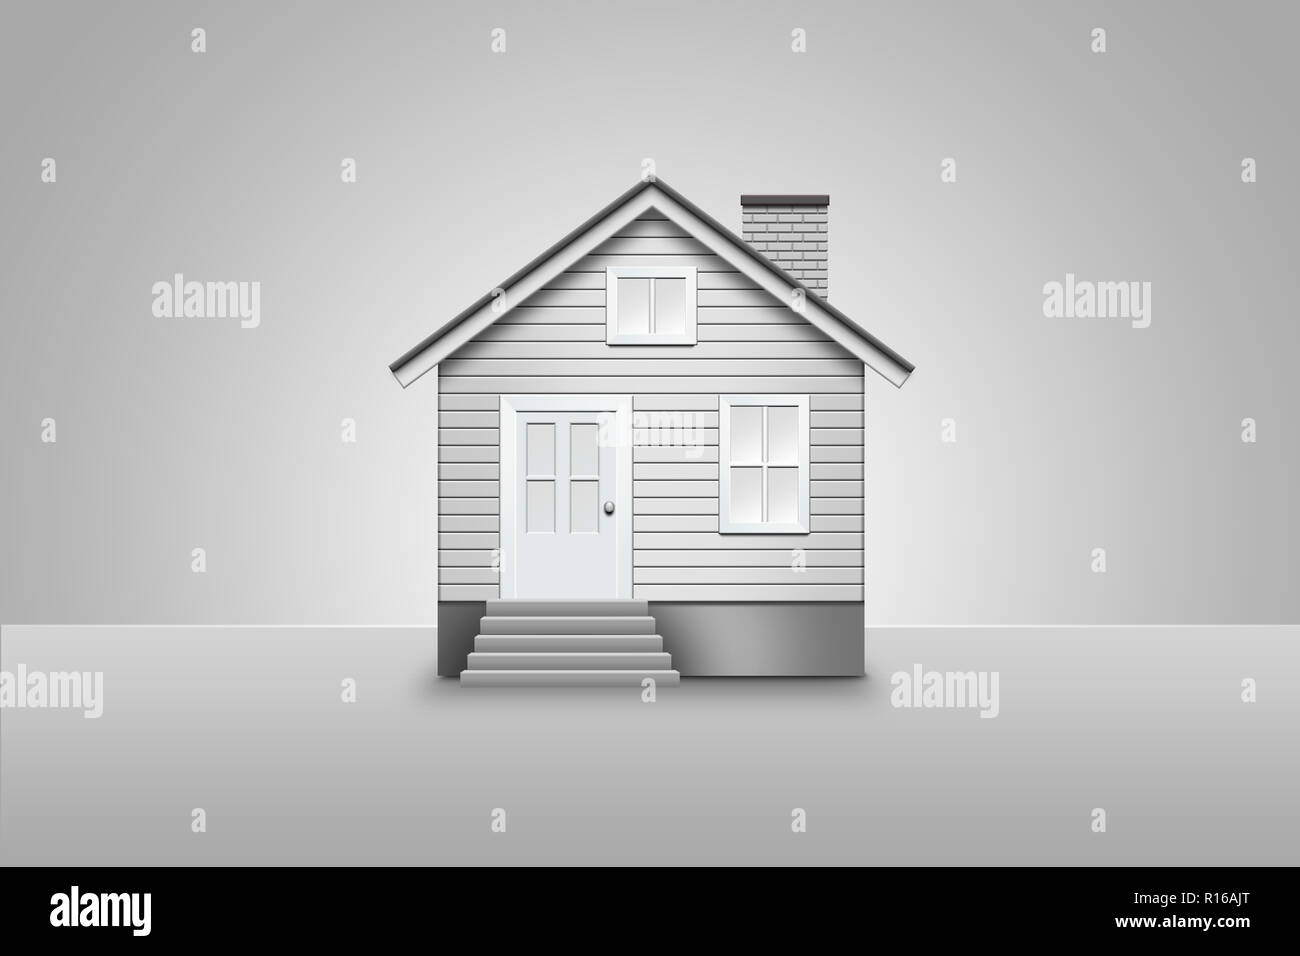 Digital image of house facade, black & white Stock Photo